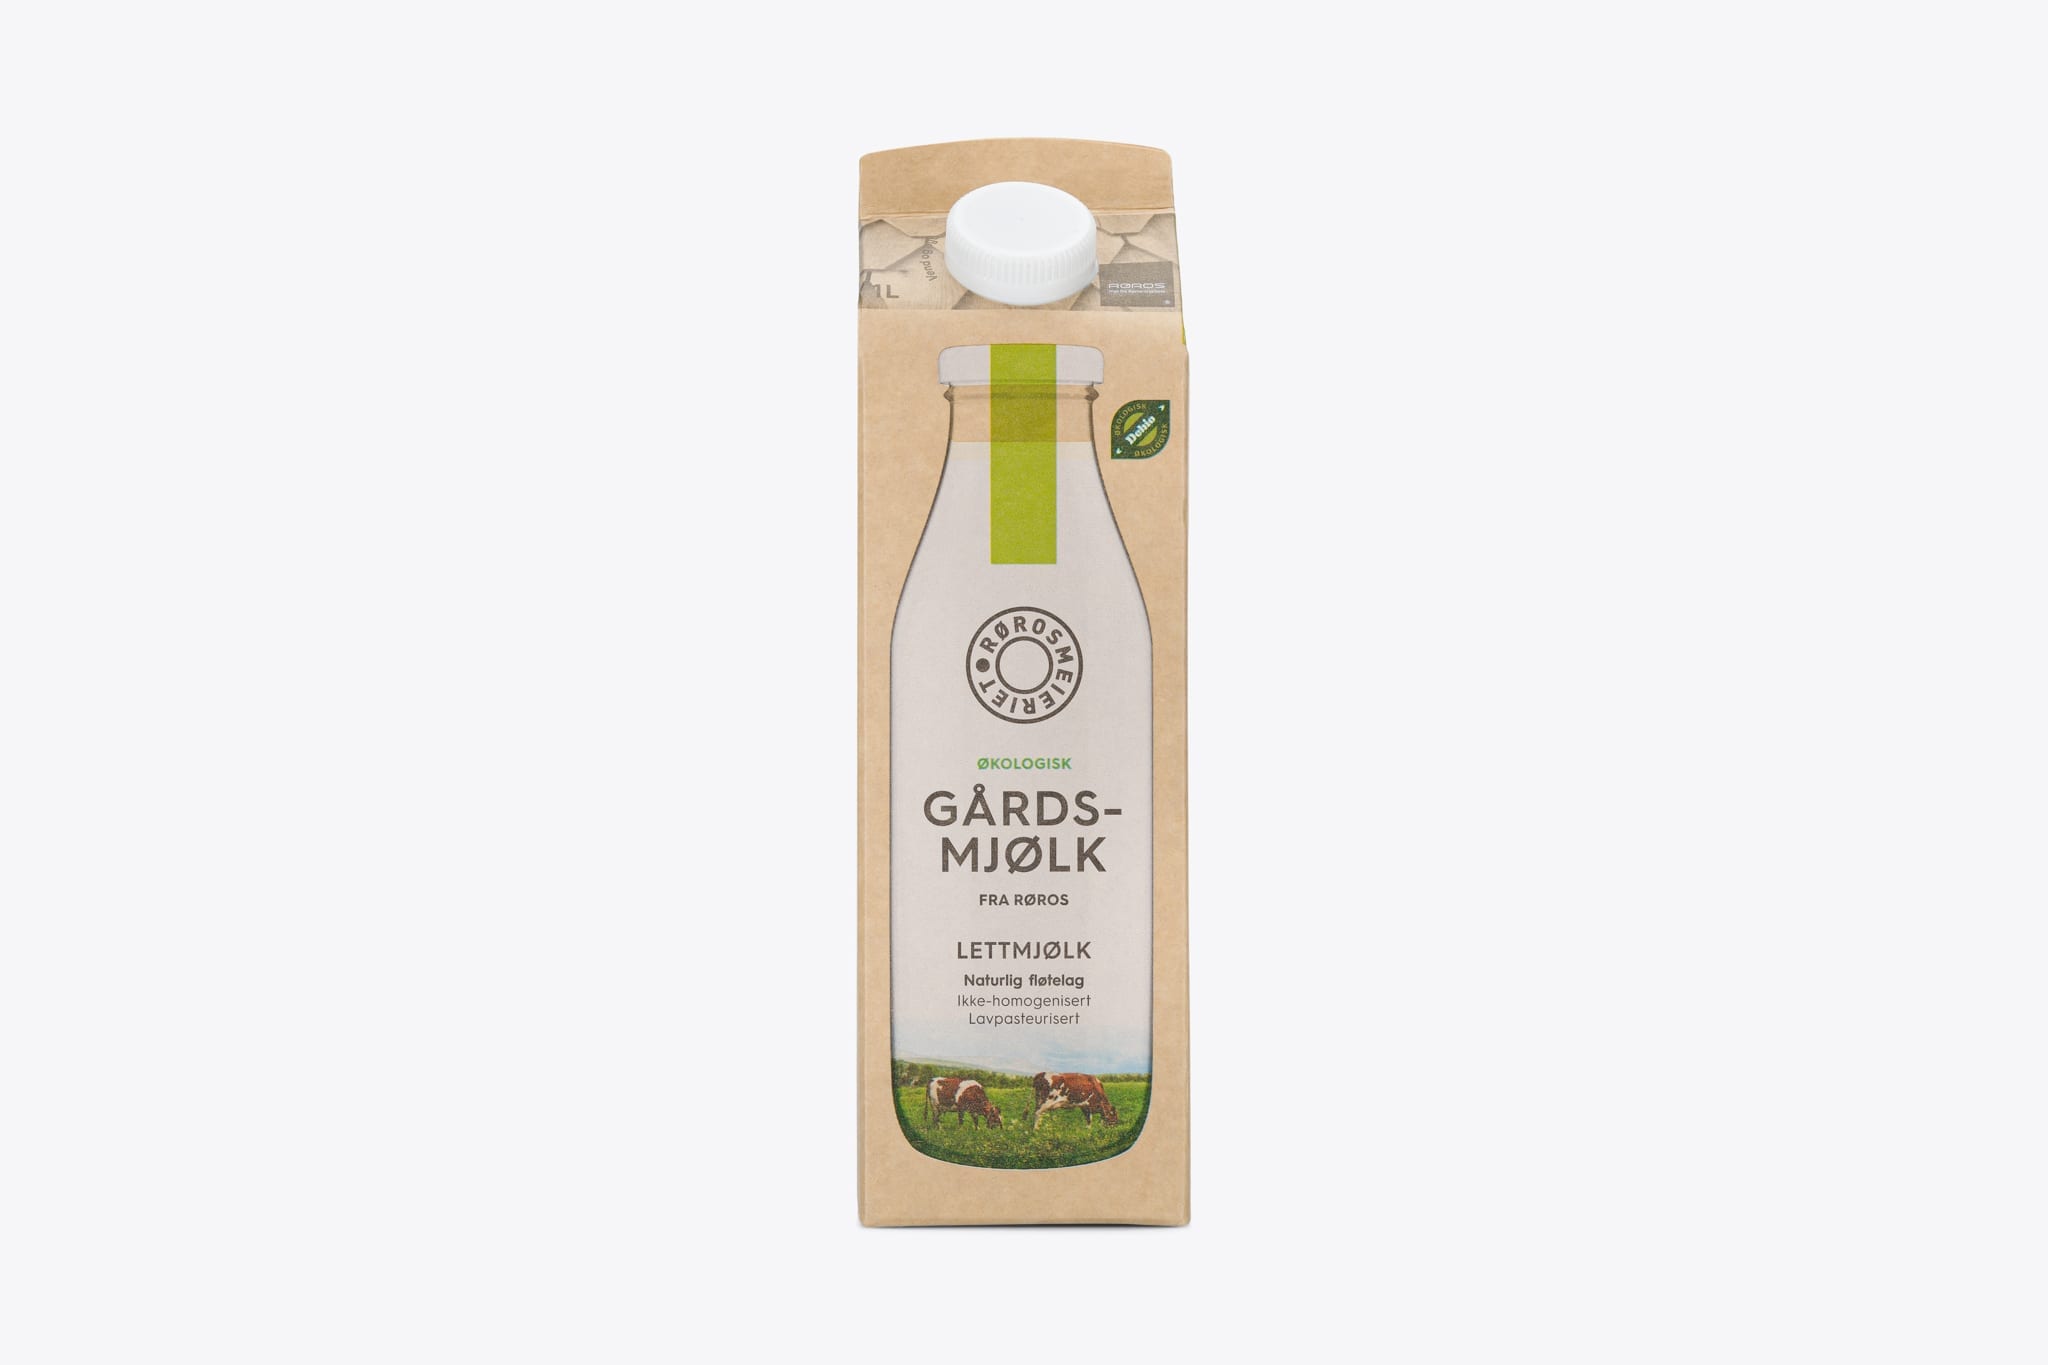 Økologisk Gårdsmjølk fra Røros